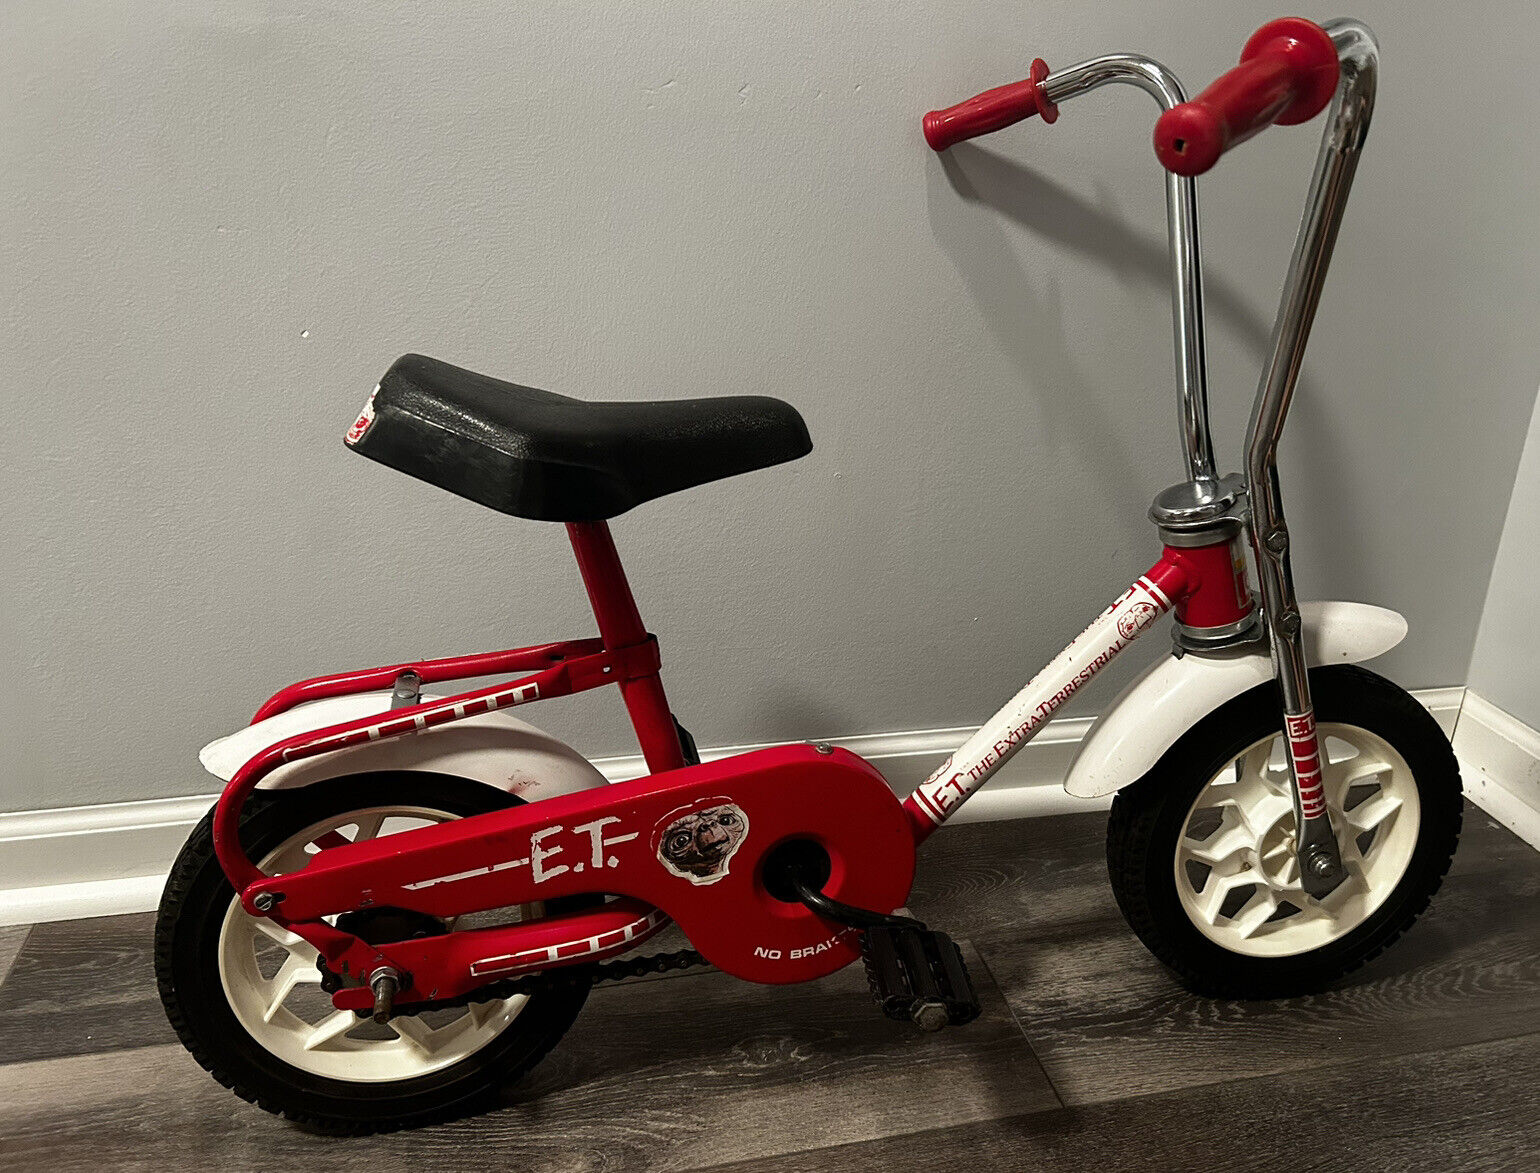 VERY Rare Vintage E.T. 1982 Bike Hedstrom USA Universal City Studios Terrestrial